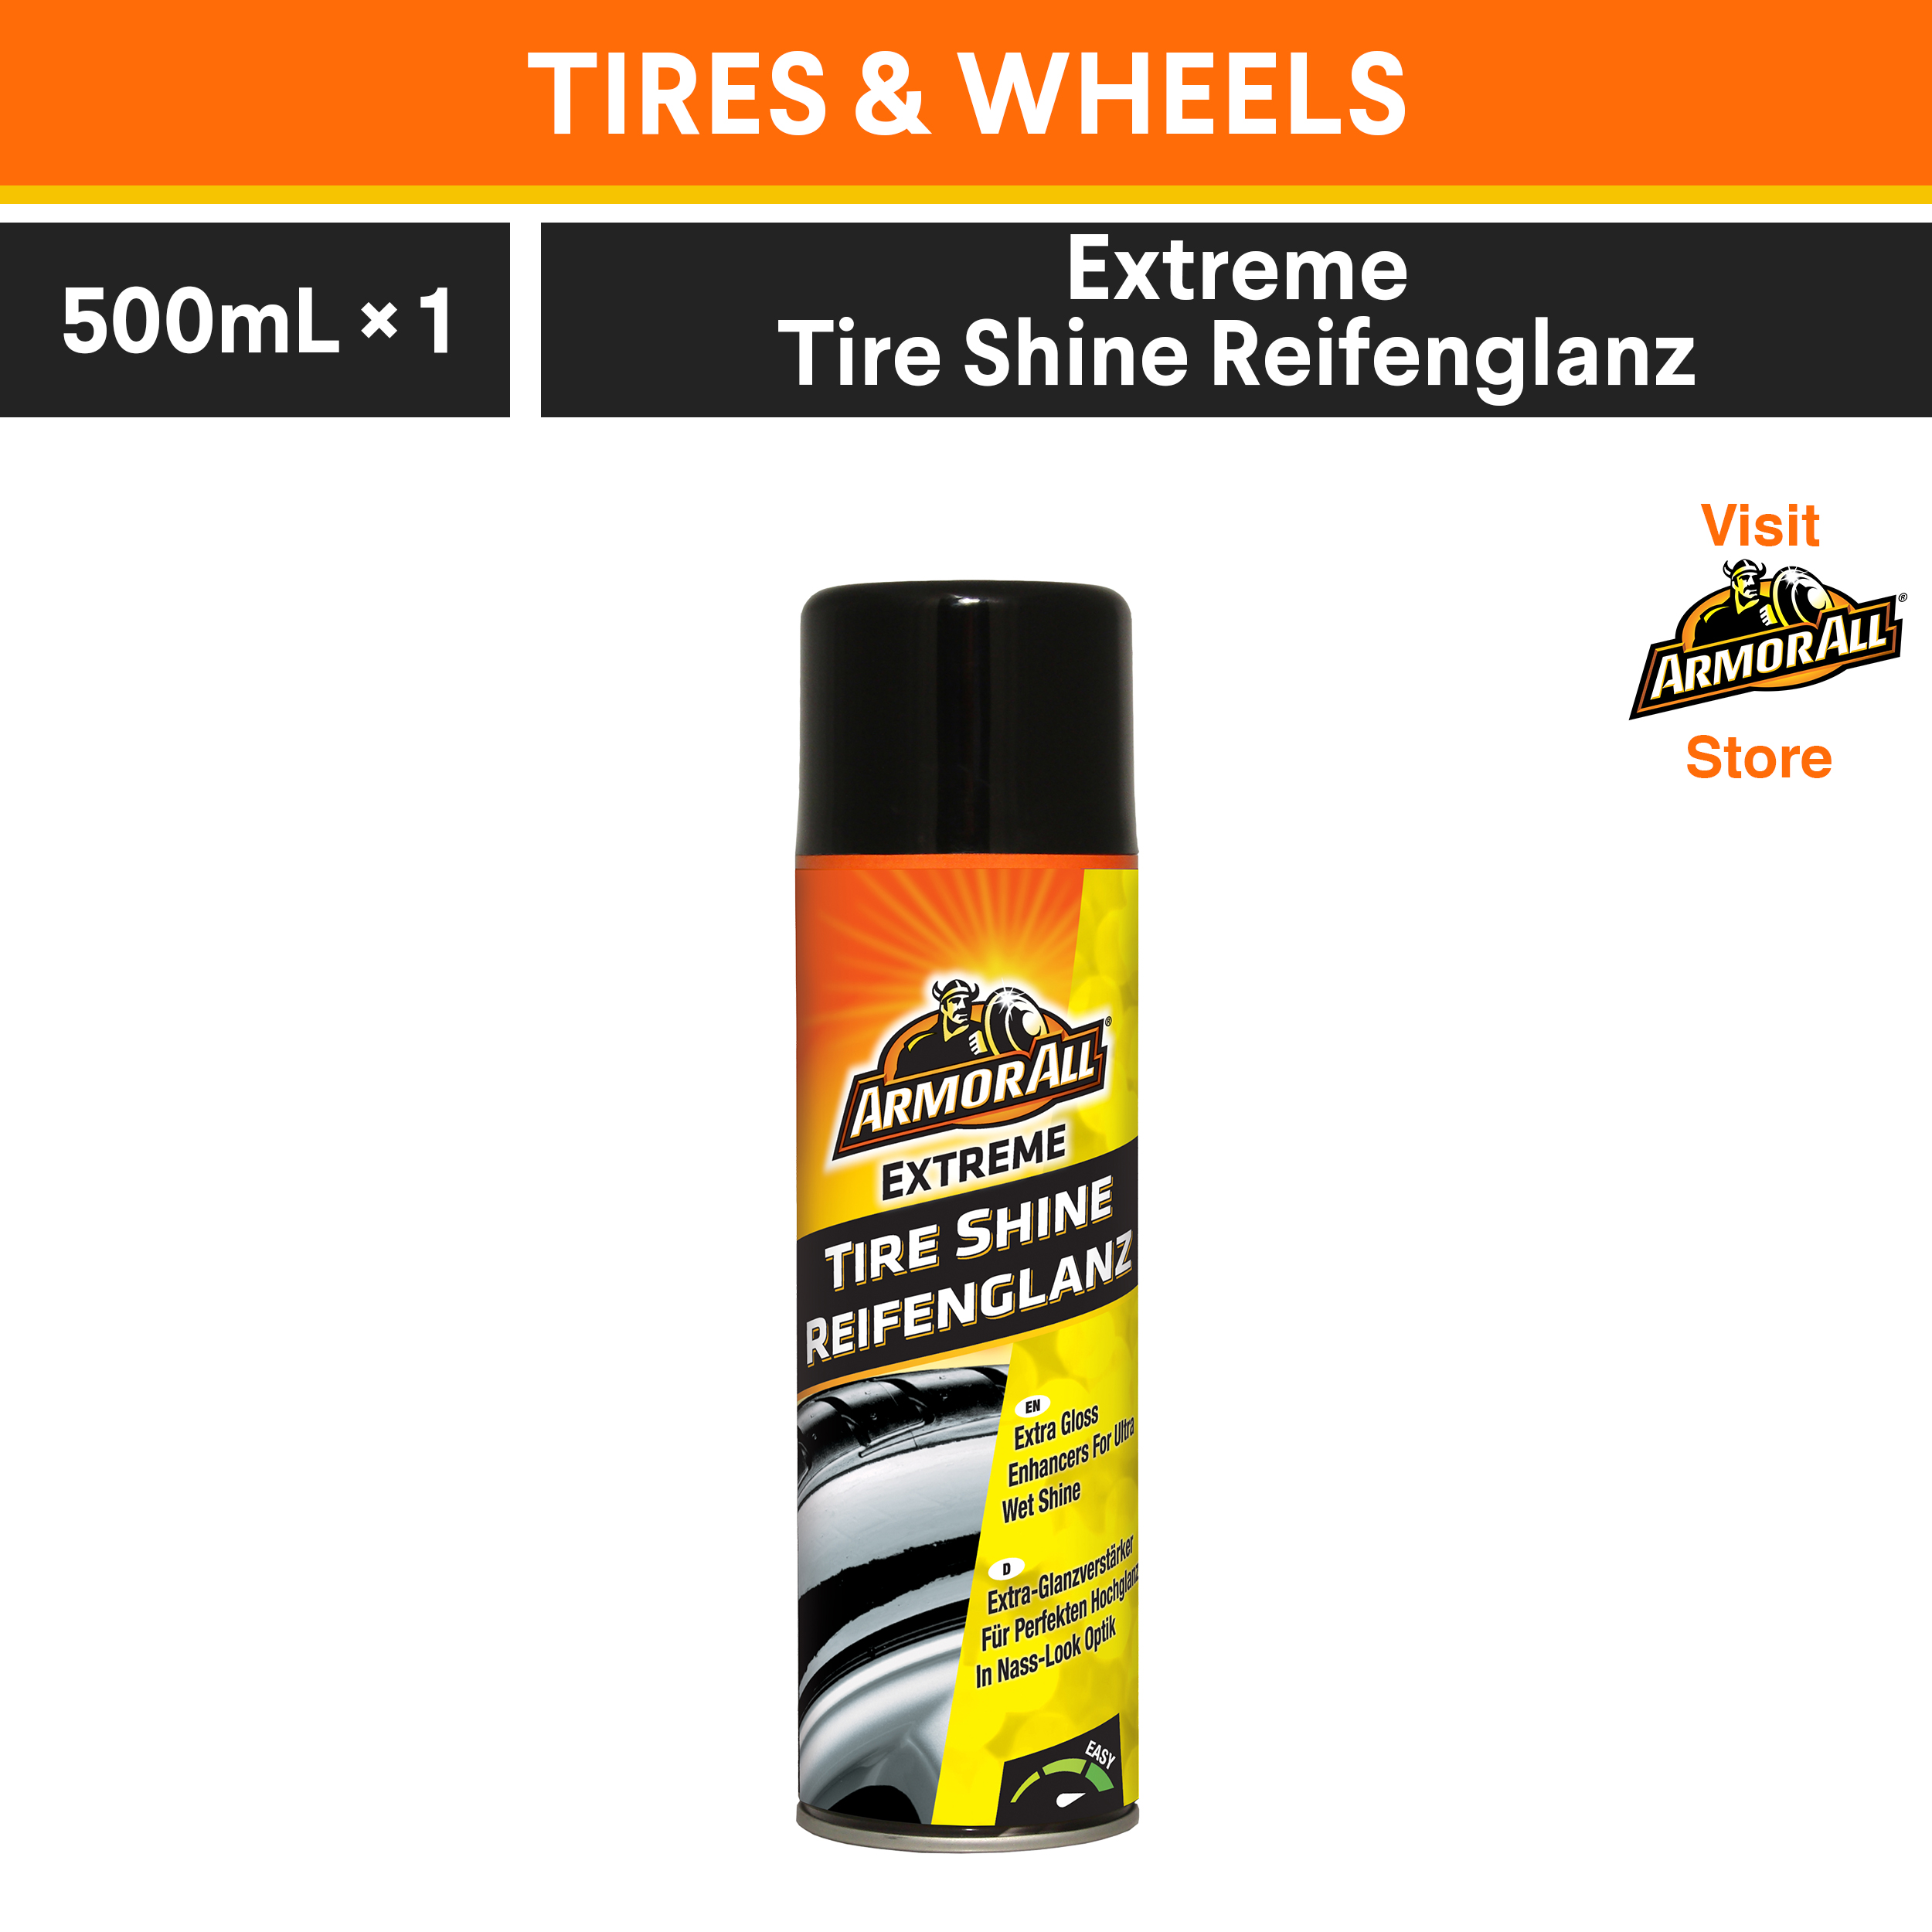 Tyre Shine Sponge - Best Price in Singapore - Jan 2024